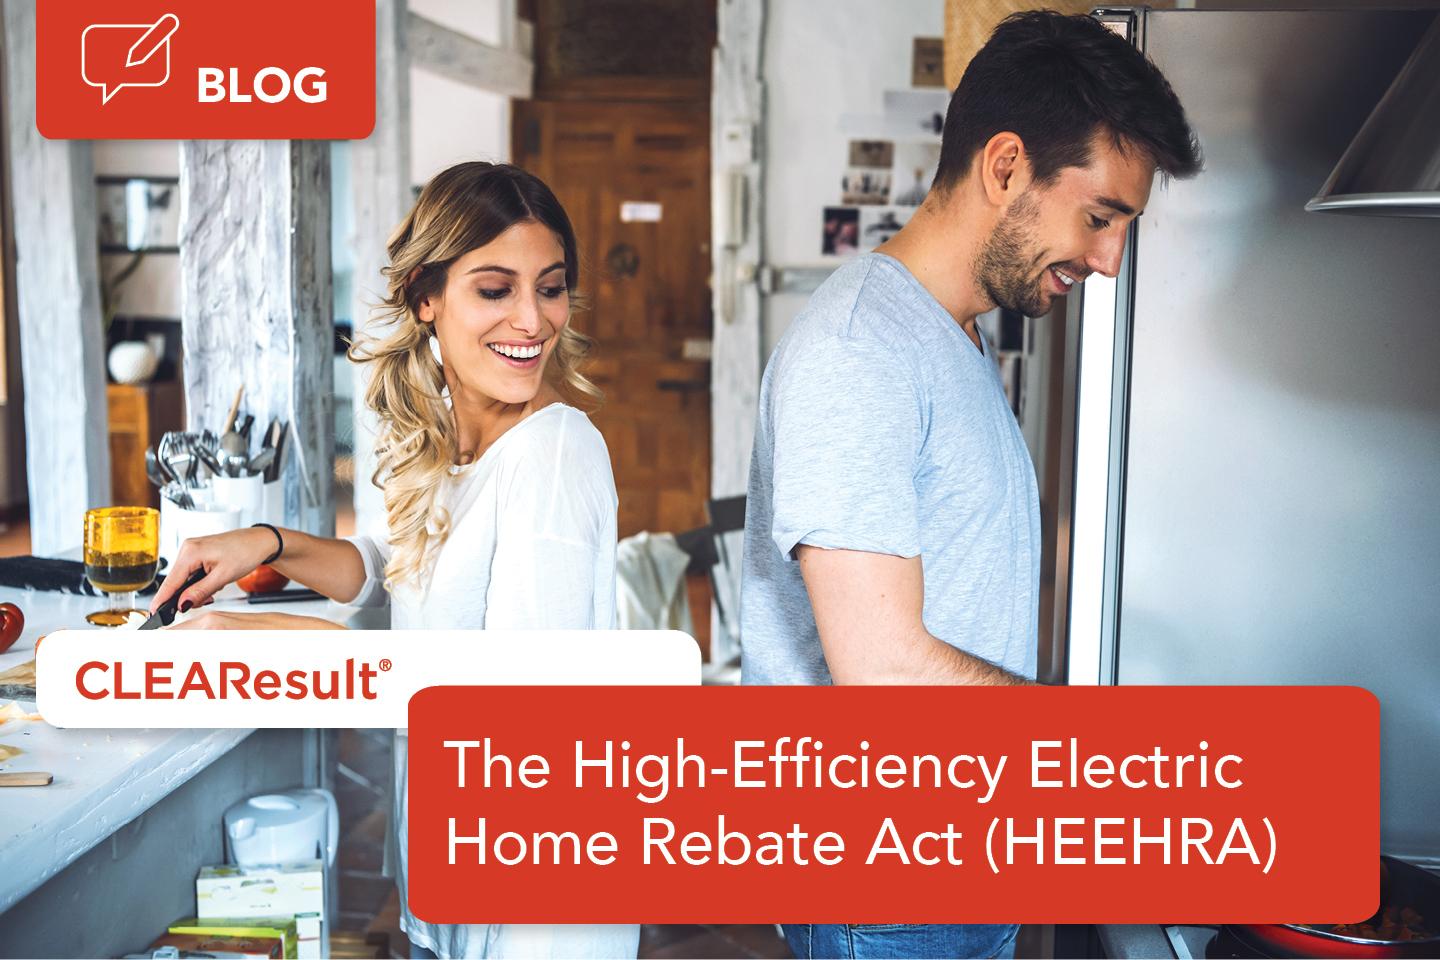 Understanding the High-Efficiency Electric Home Rebate Act (HEEHRA)